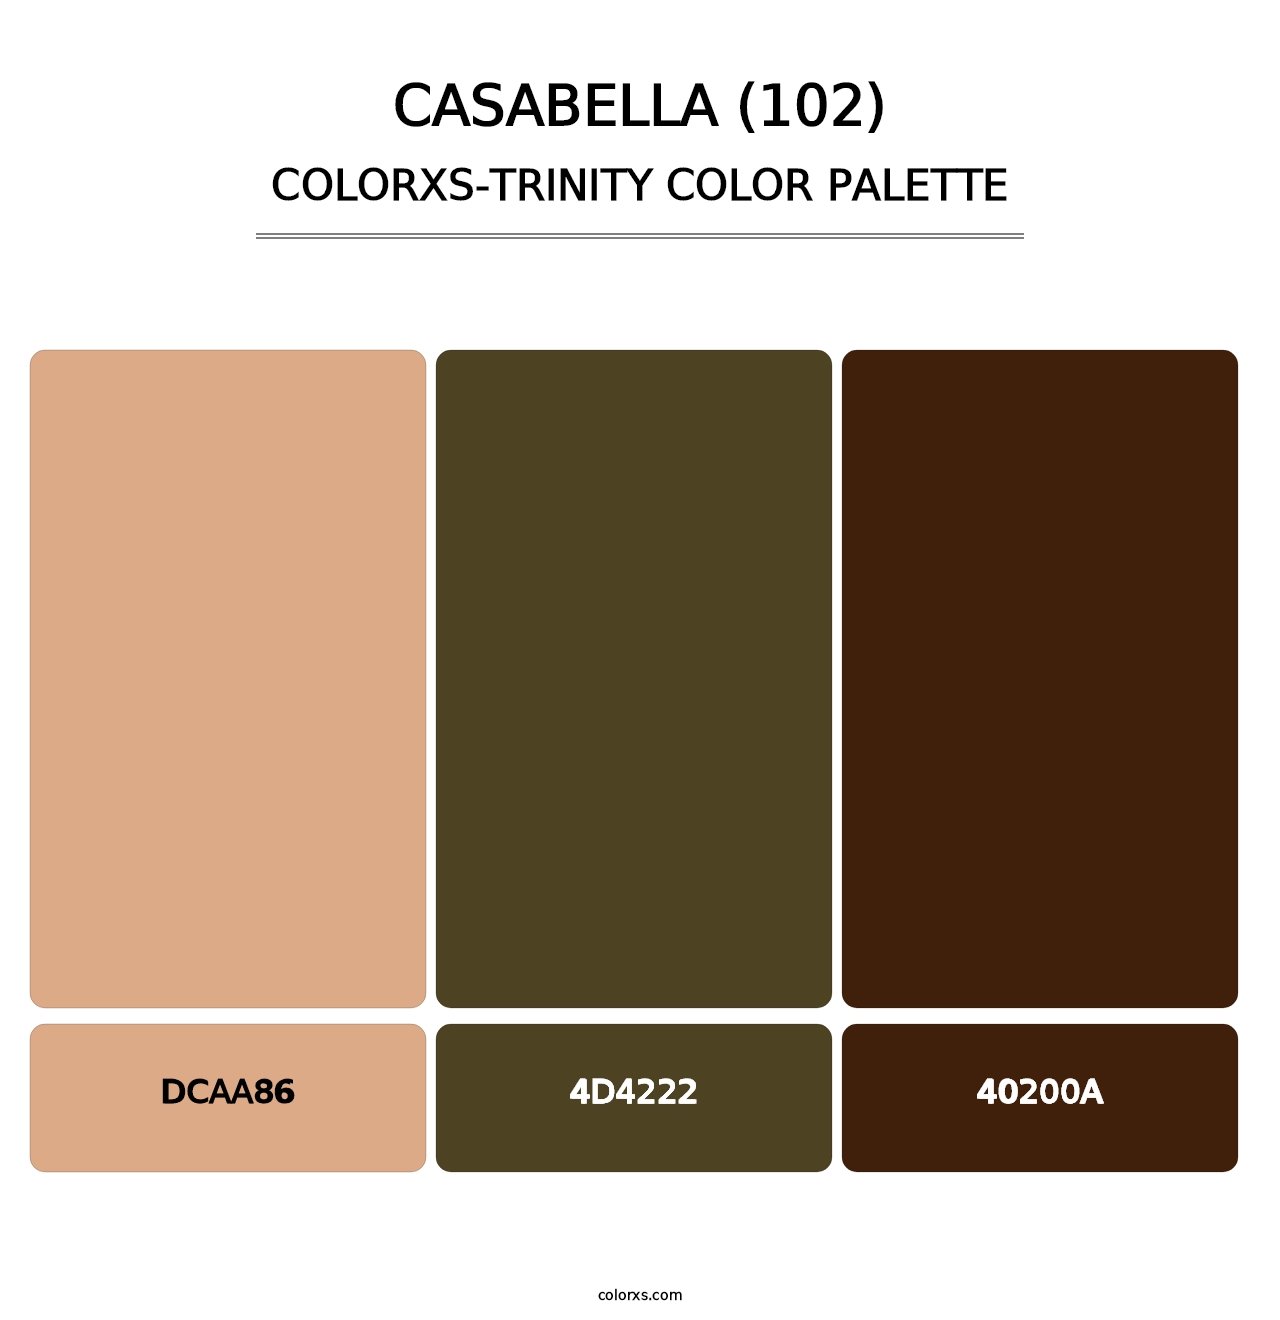 Casabella (102) - Colorxs Trinity Palette